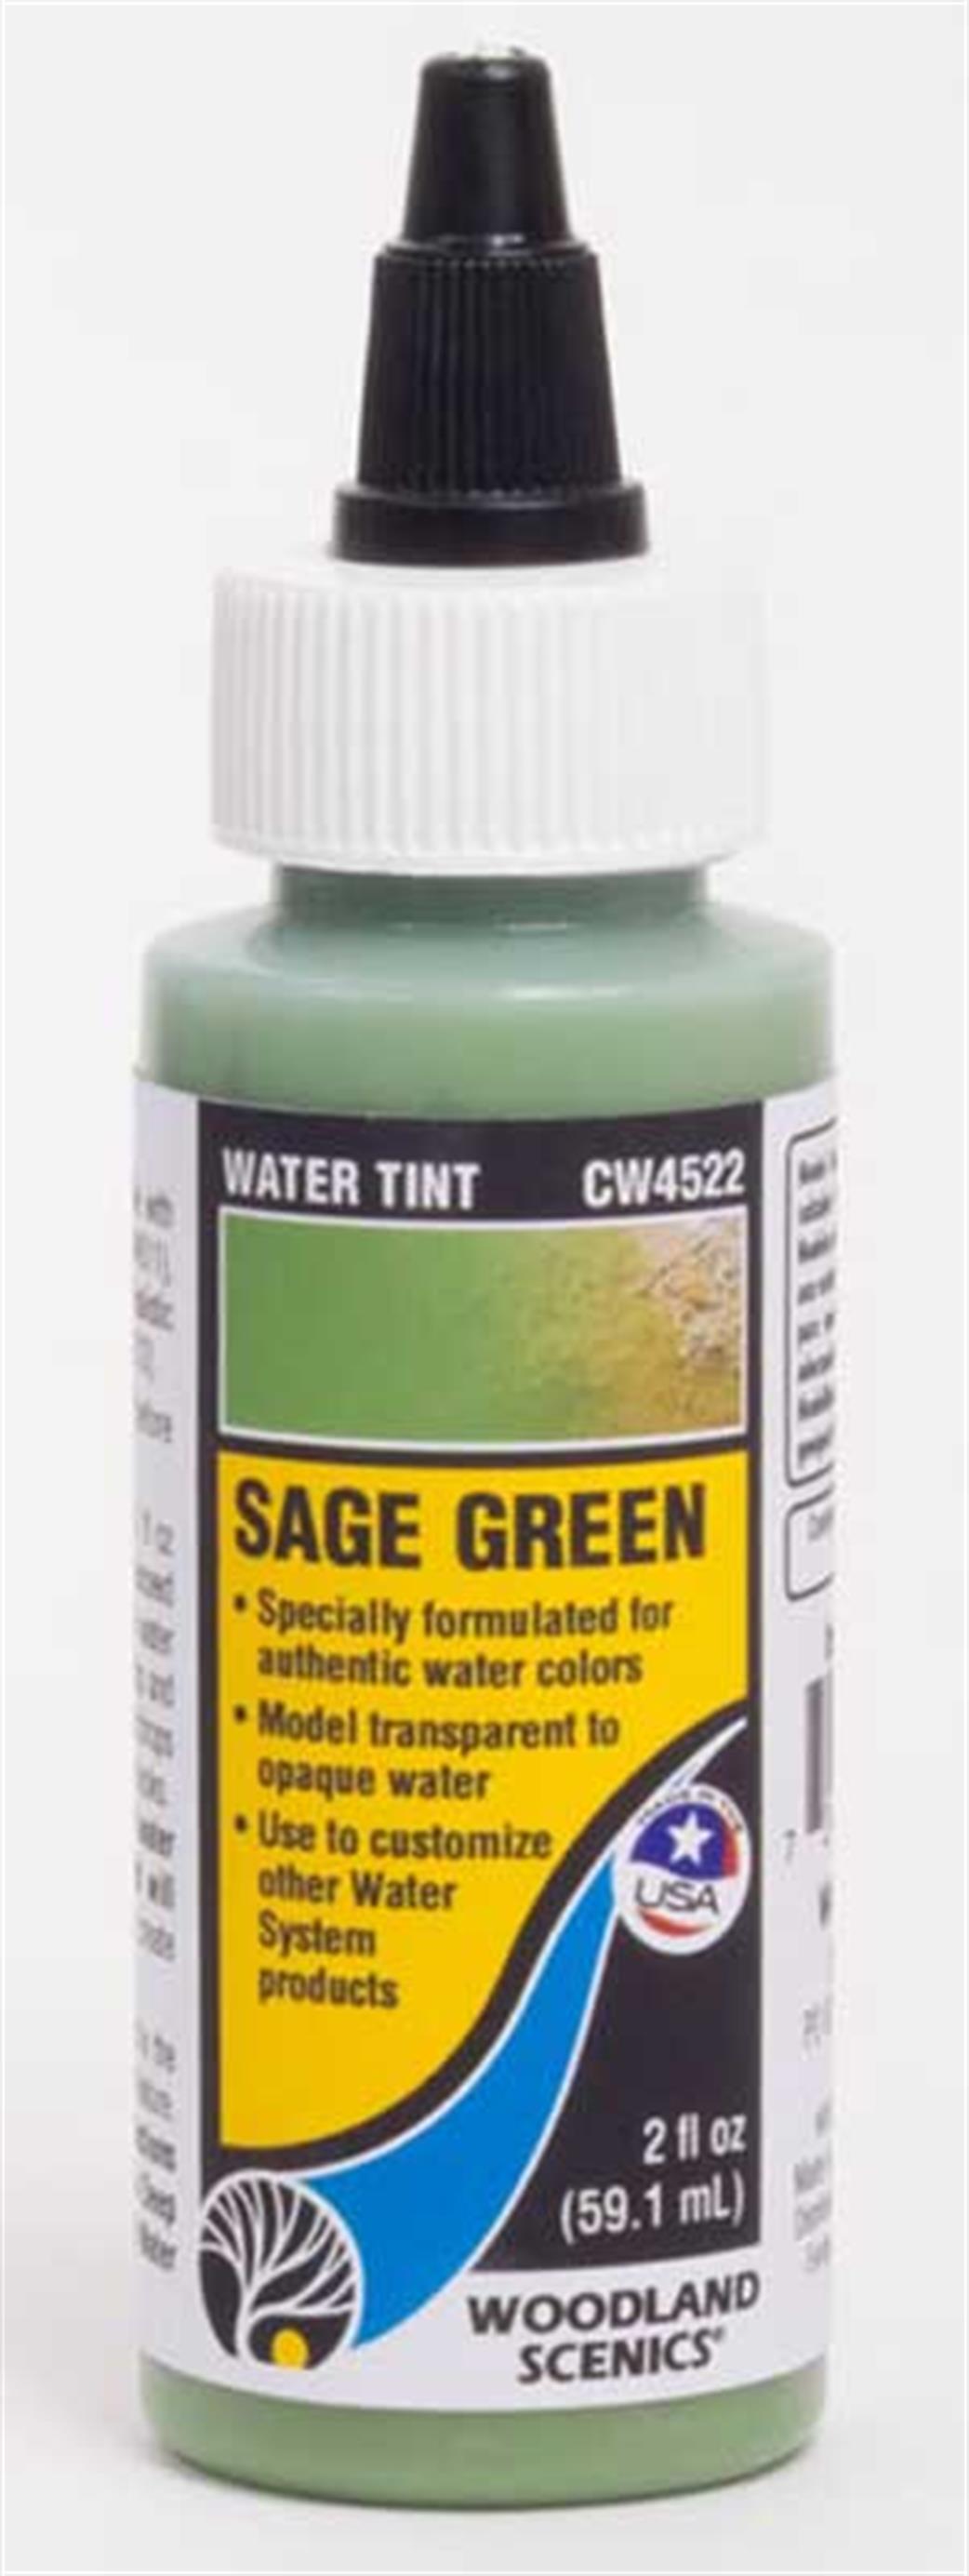 Woodland Scenics CW4522 Sage Green Water Tint